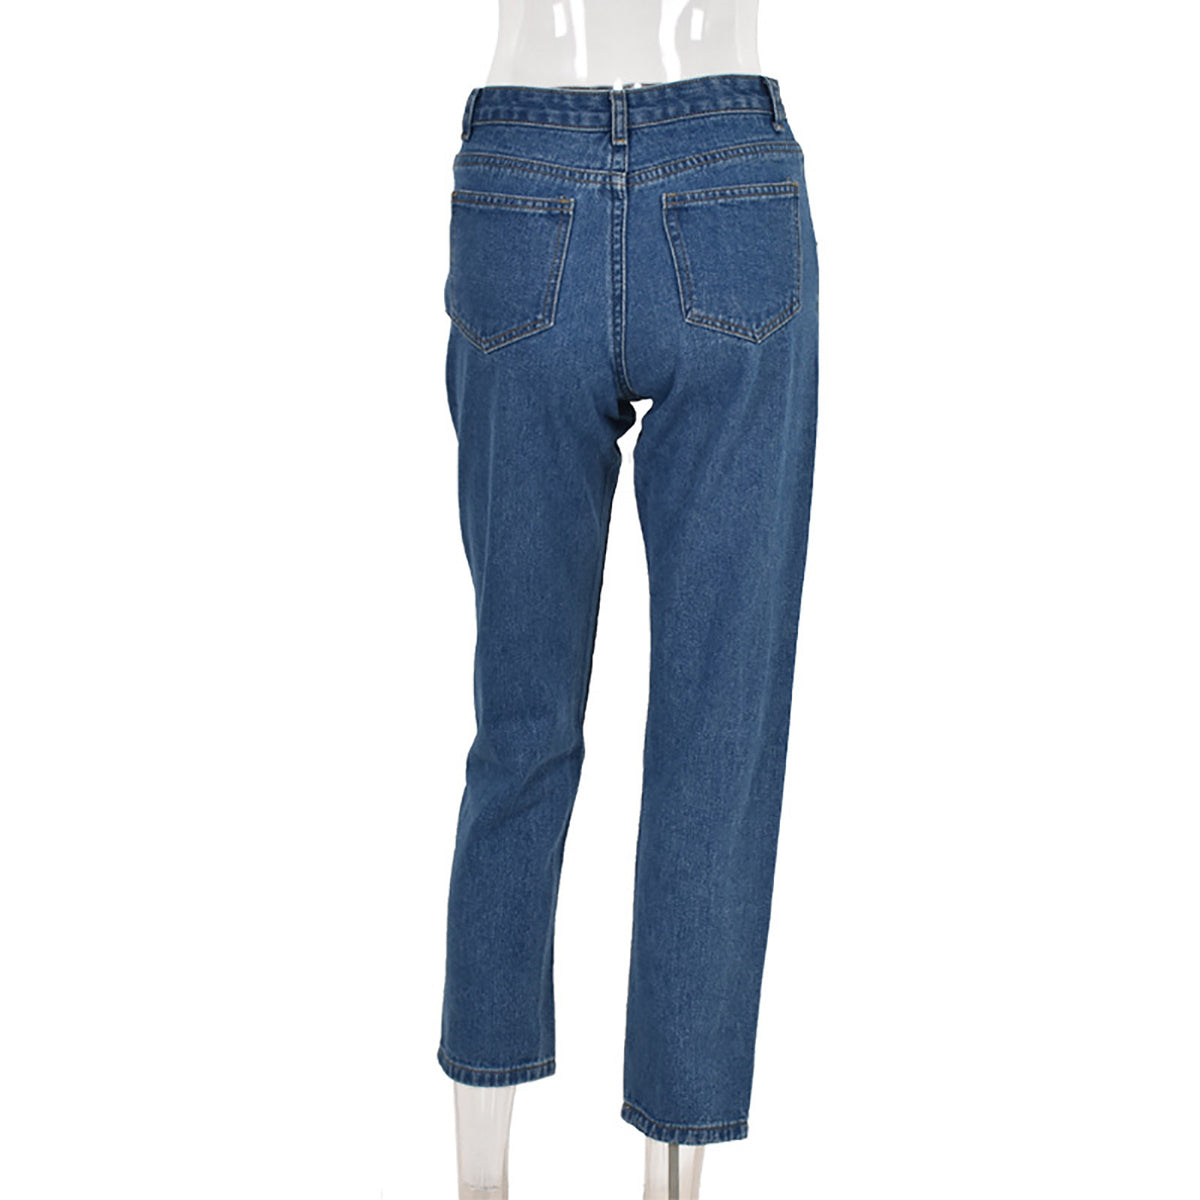 Jeans Women's New High-waist Washed Blue Long Jeans Angelwarriorfitness.com